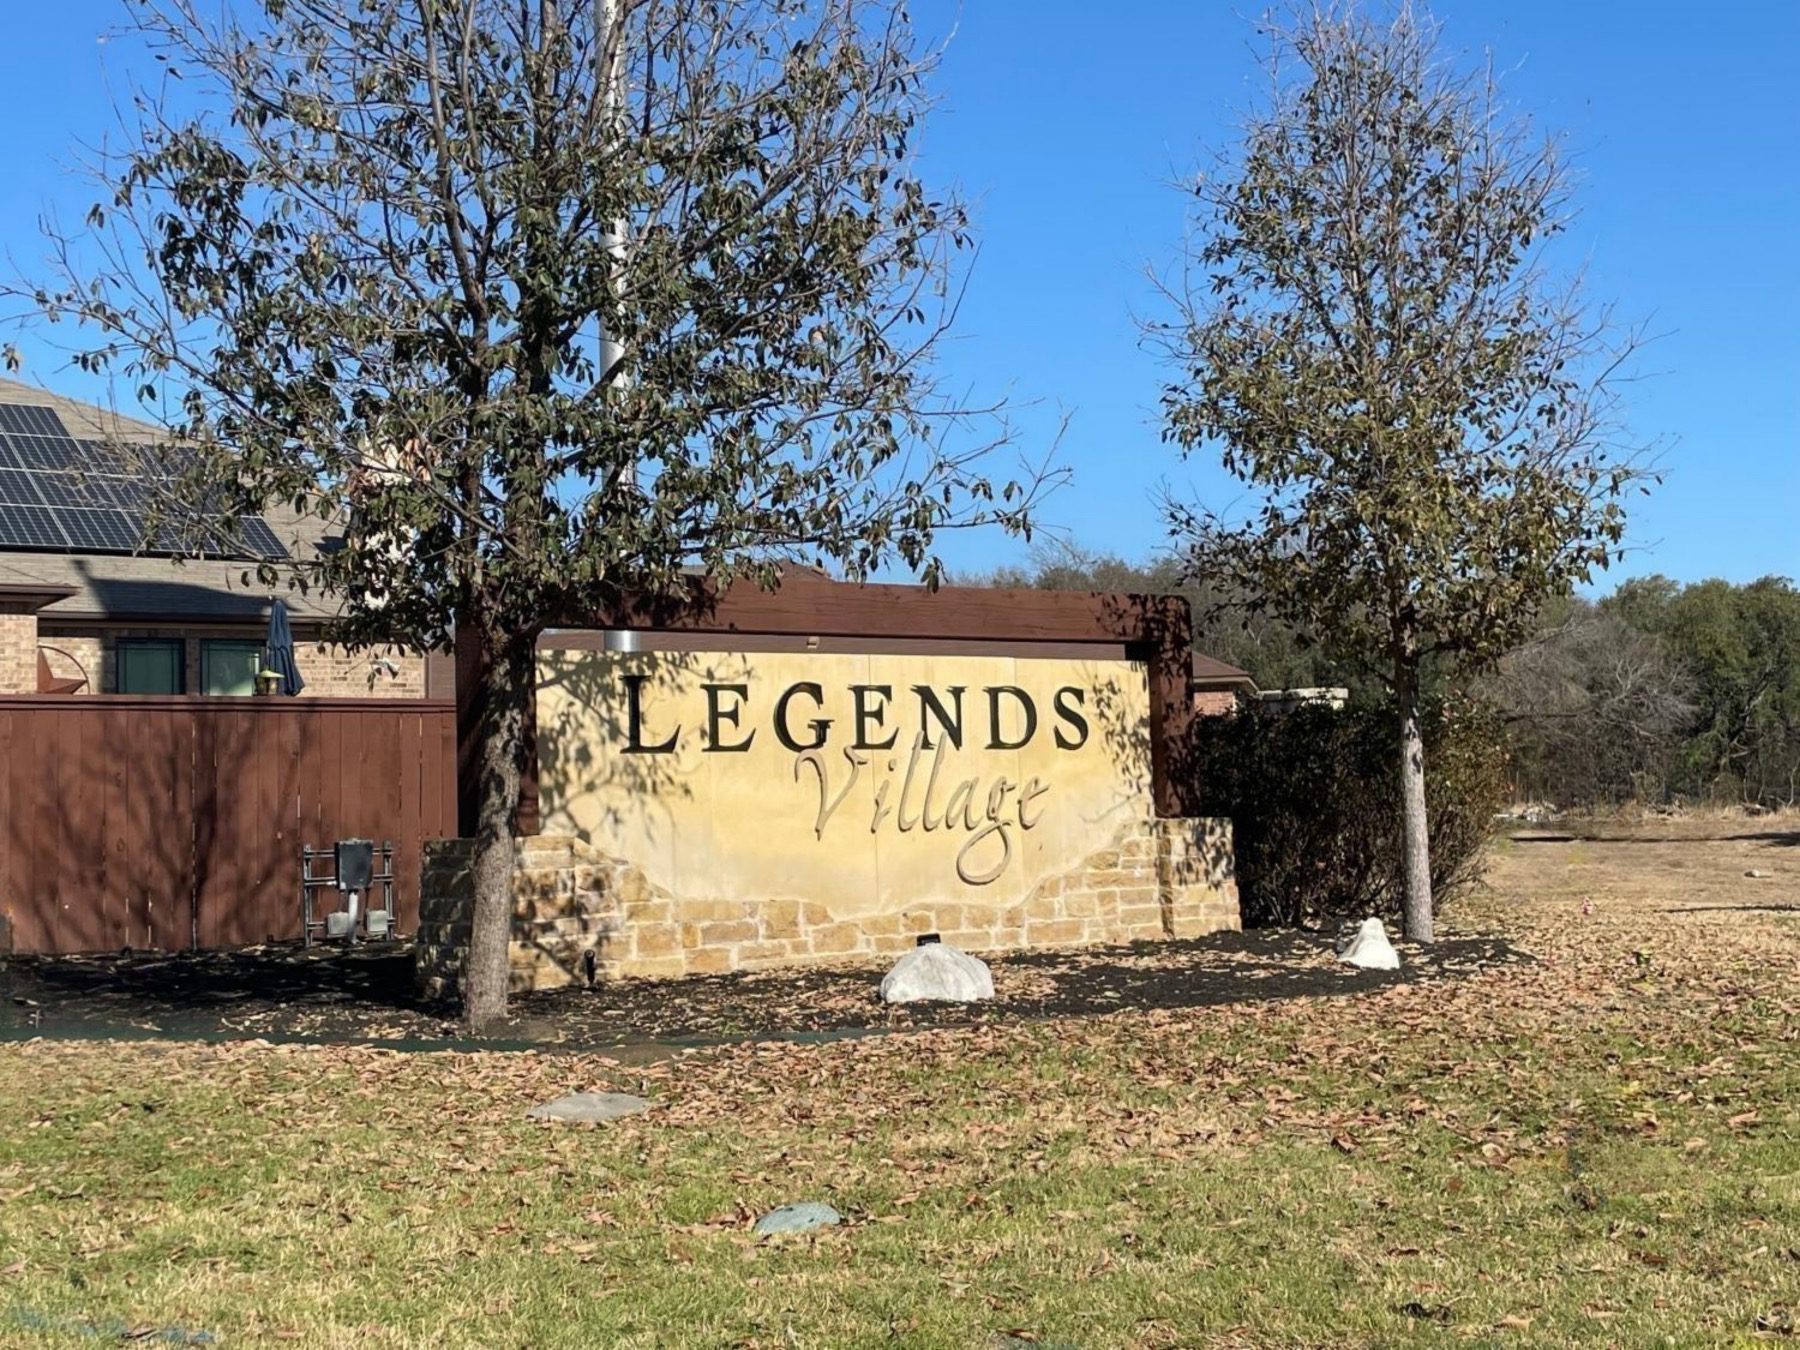 legends village round rock neighborhood guide